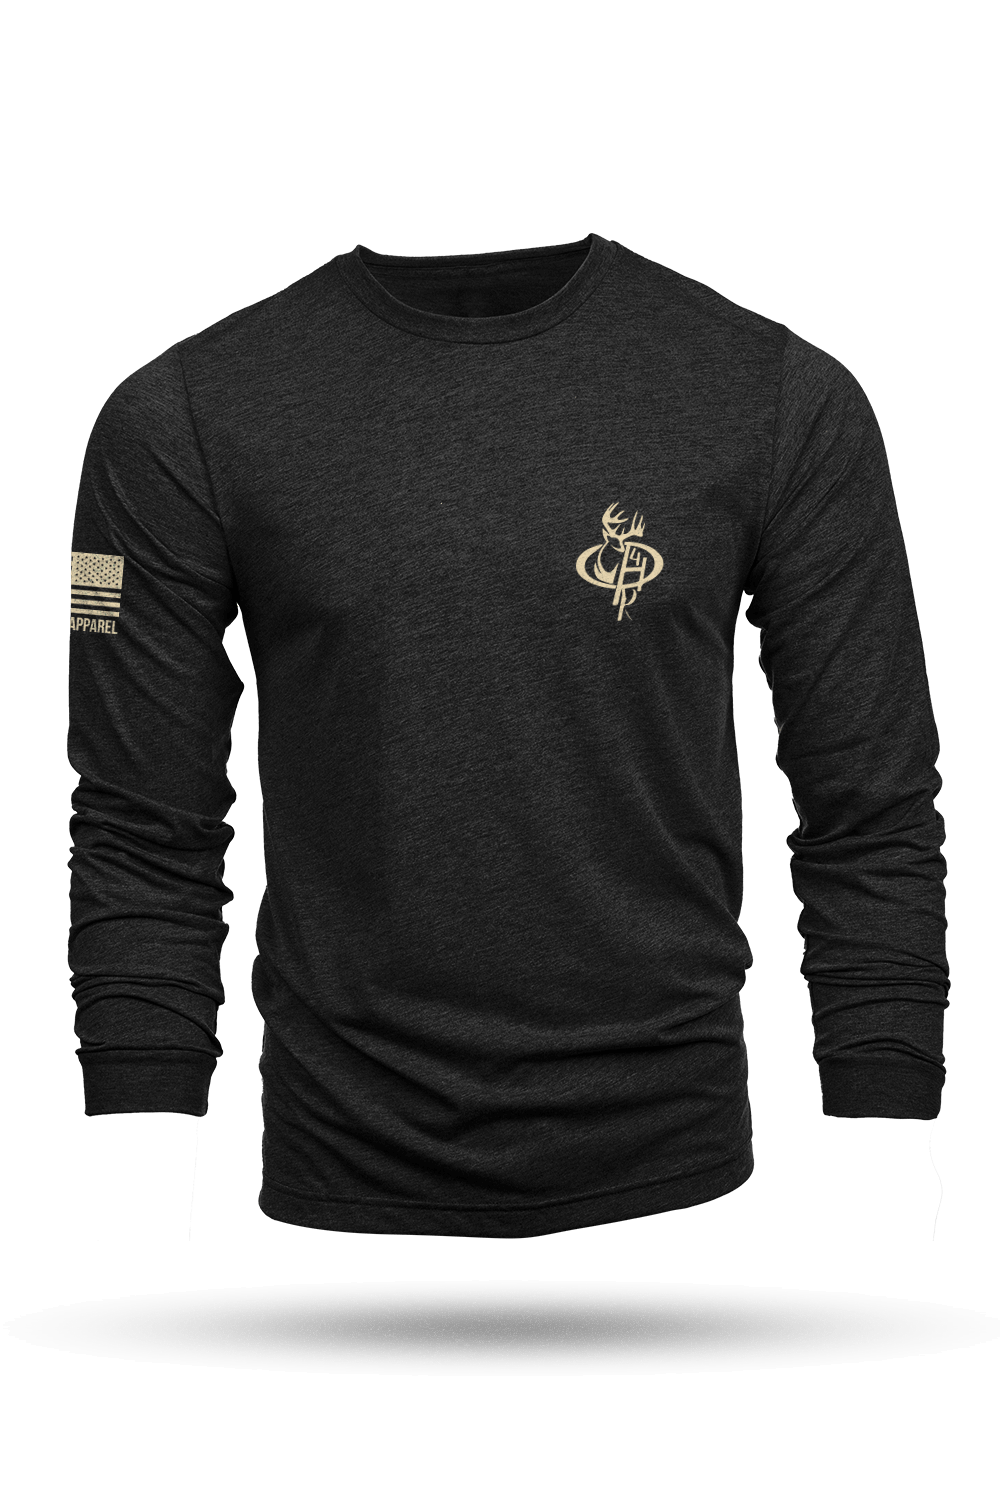 Long-Sleeve Shirt - Military Warriors